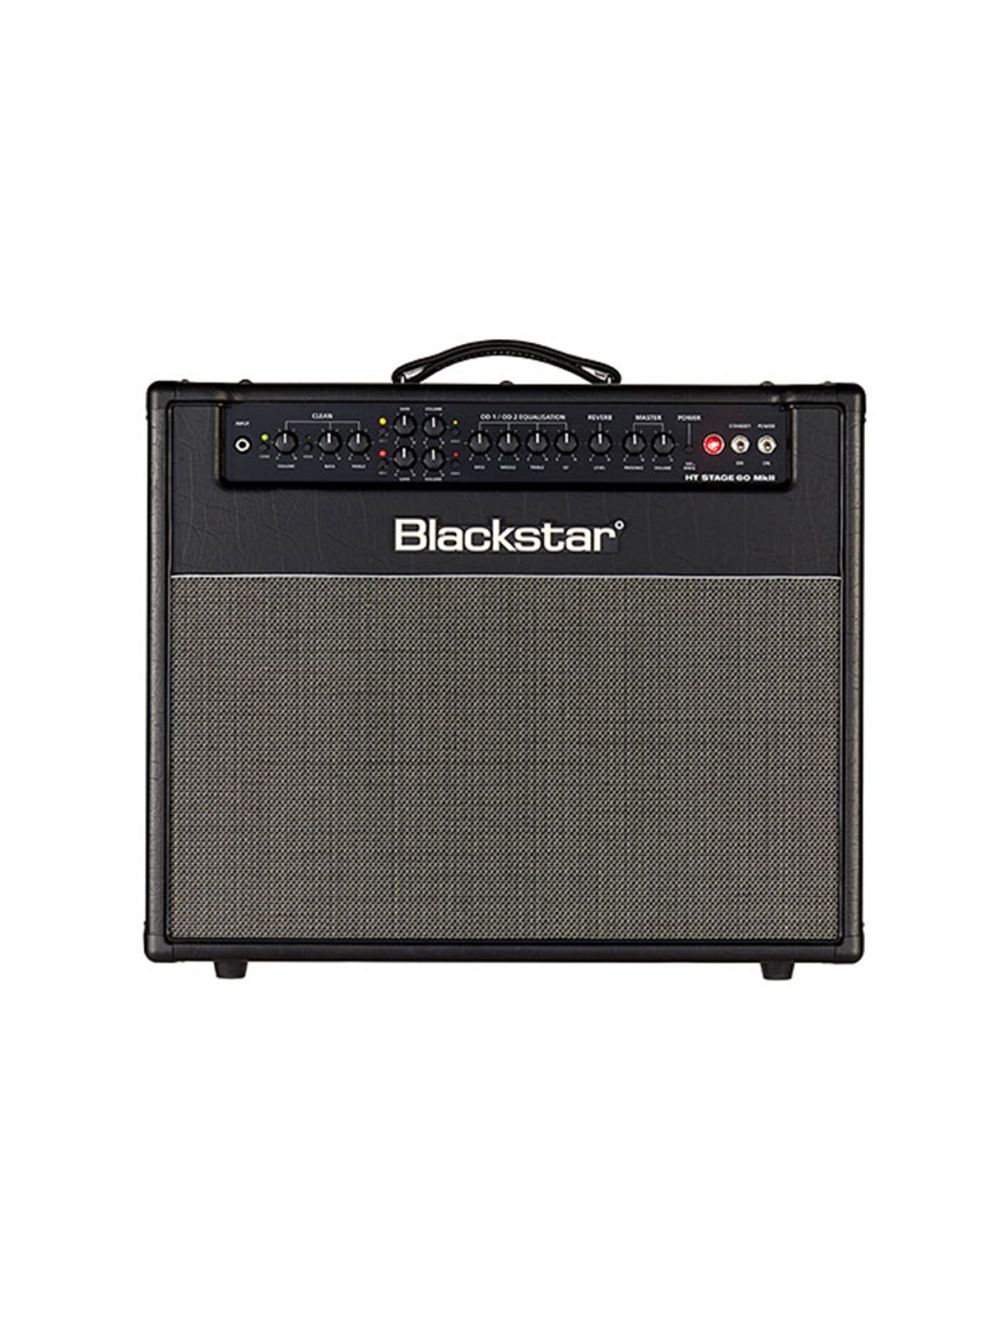 Blackstar HT Stage 60 MKII 60-Watt 1x12" Combo - Open Box guitar tube amp $559